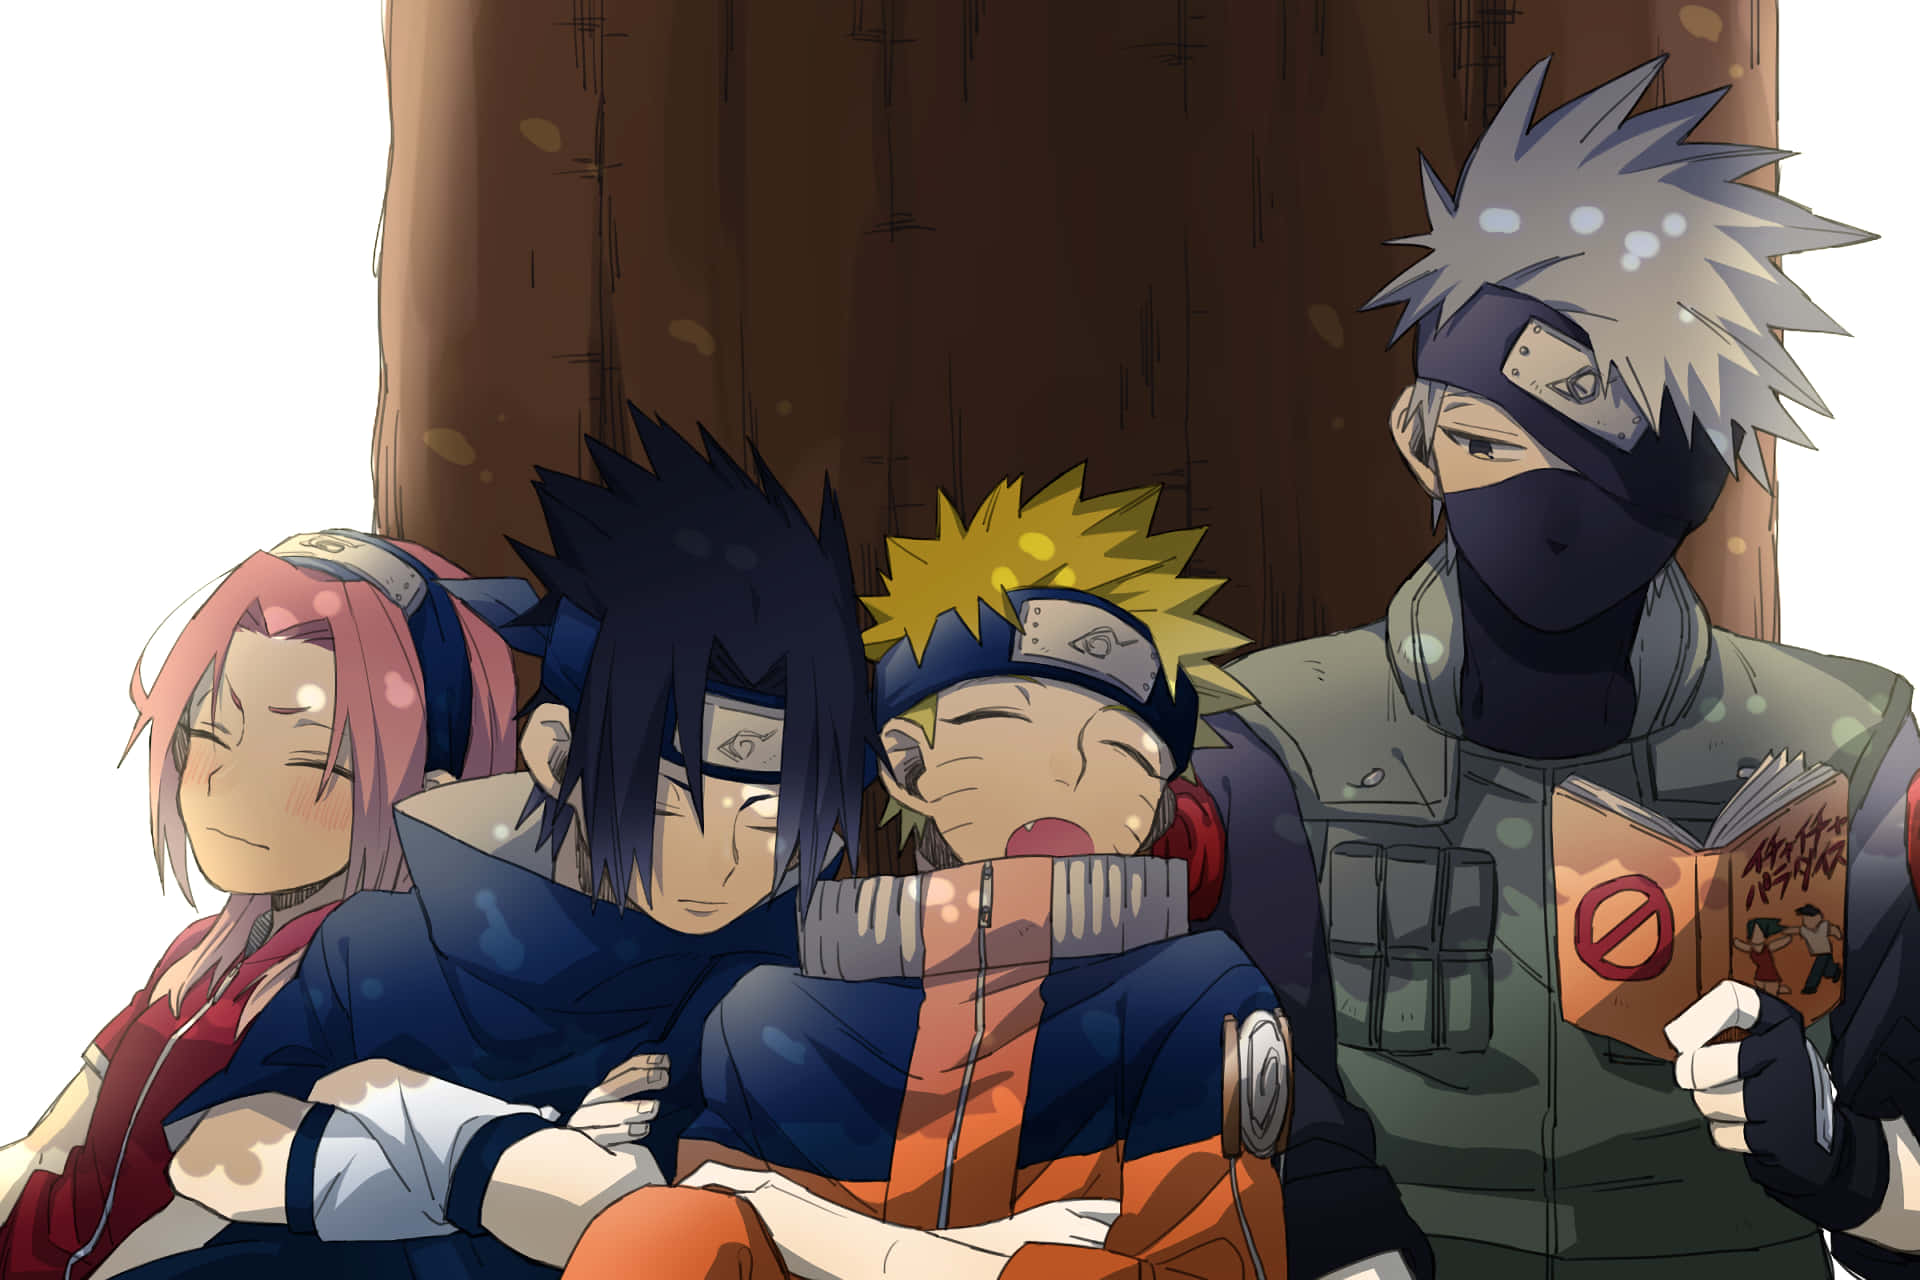 An epic meeting between three iconic ninjas - Naruto, Sasuke and Kakashi. Wallpaper